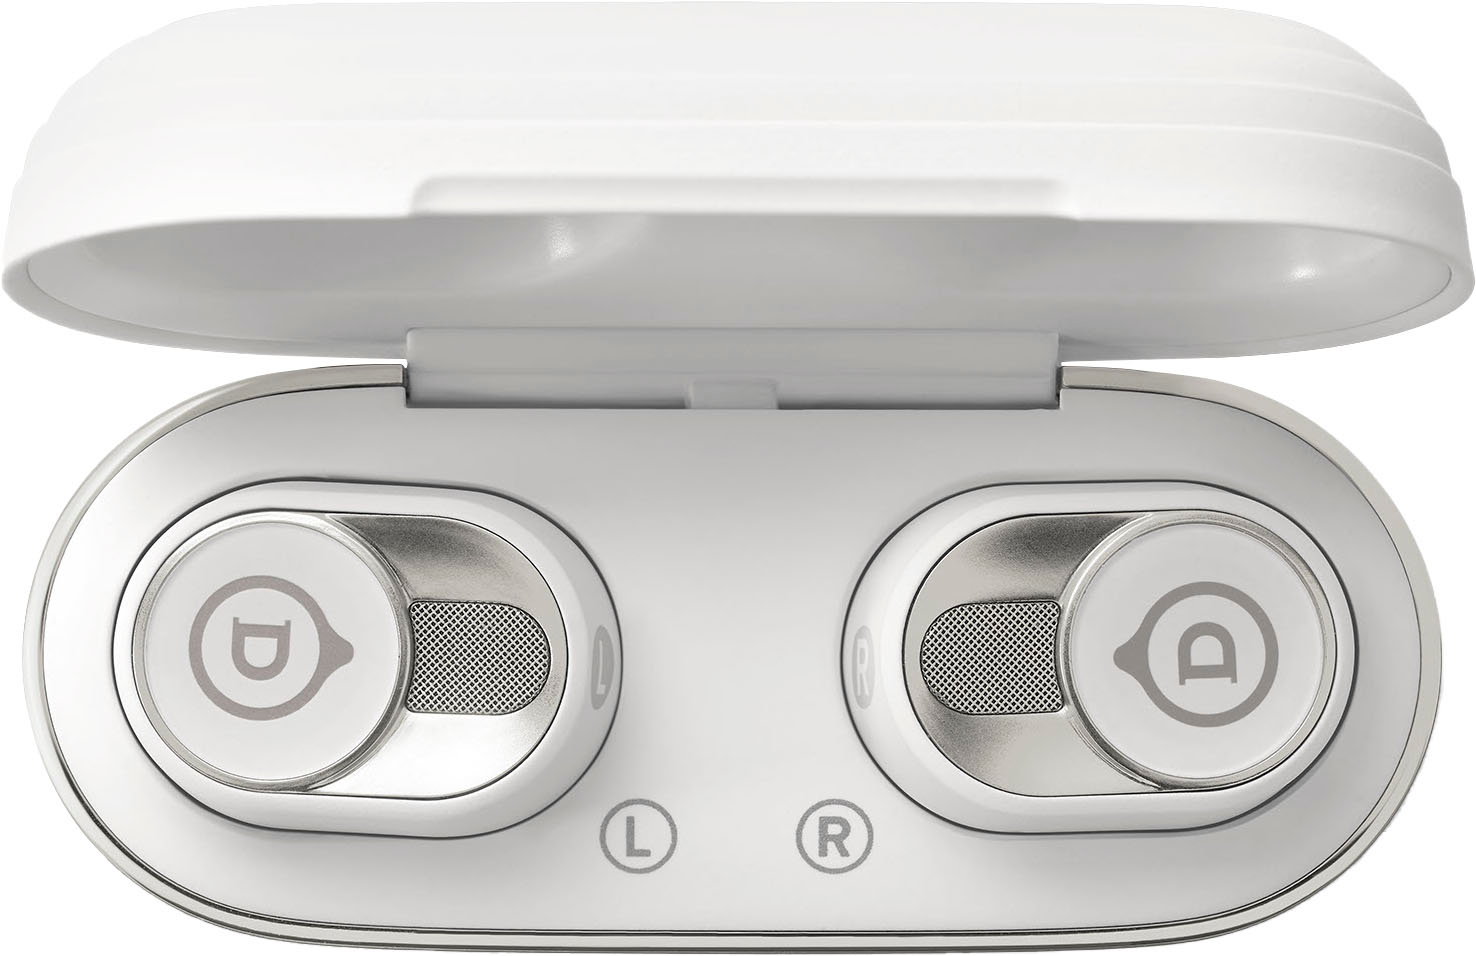 Devialet Gemini II Wireless Earbuds Iconic White EL213 - Best Buy